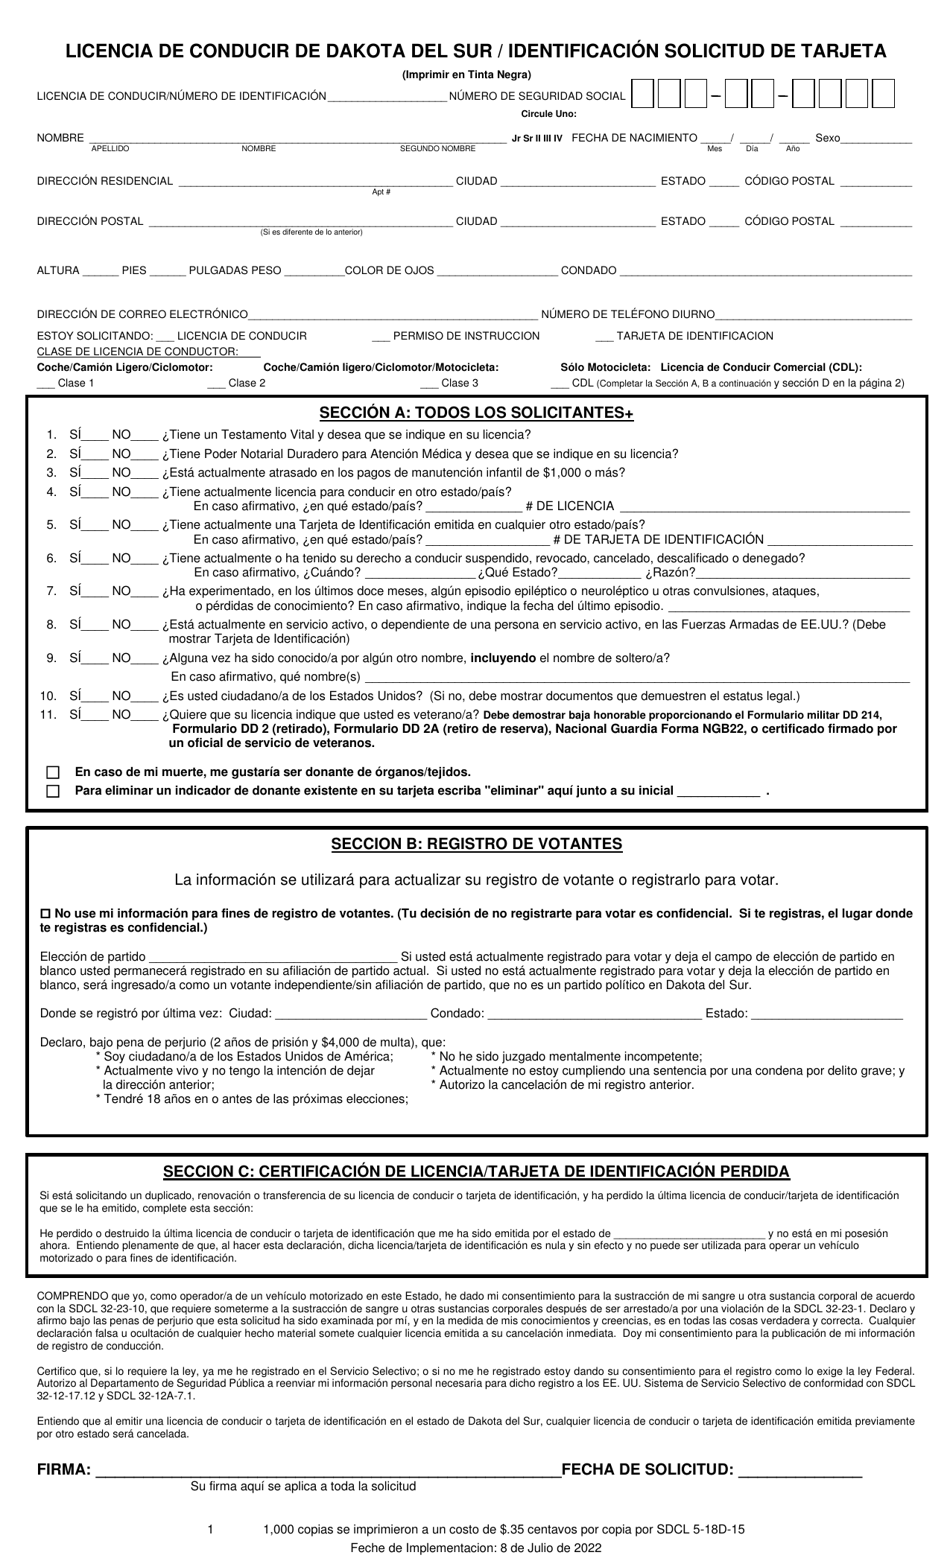 Licencia De Conducir De Dakota Del Sur / Identificacion Solicitud De Tarjeta - South Dakota (Spanish), Page 1